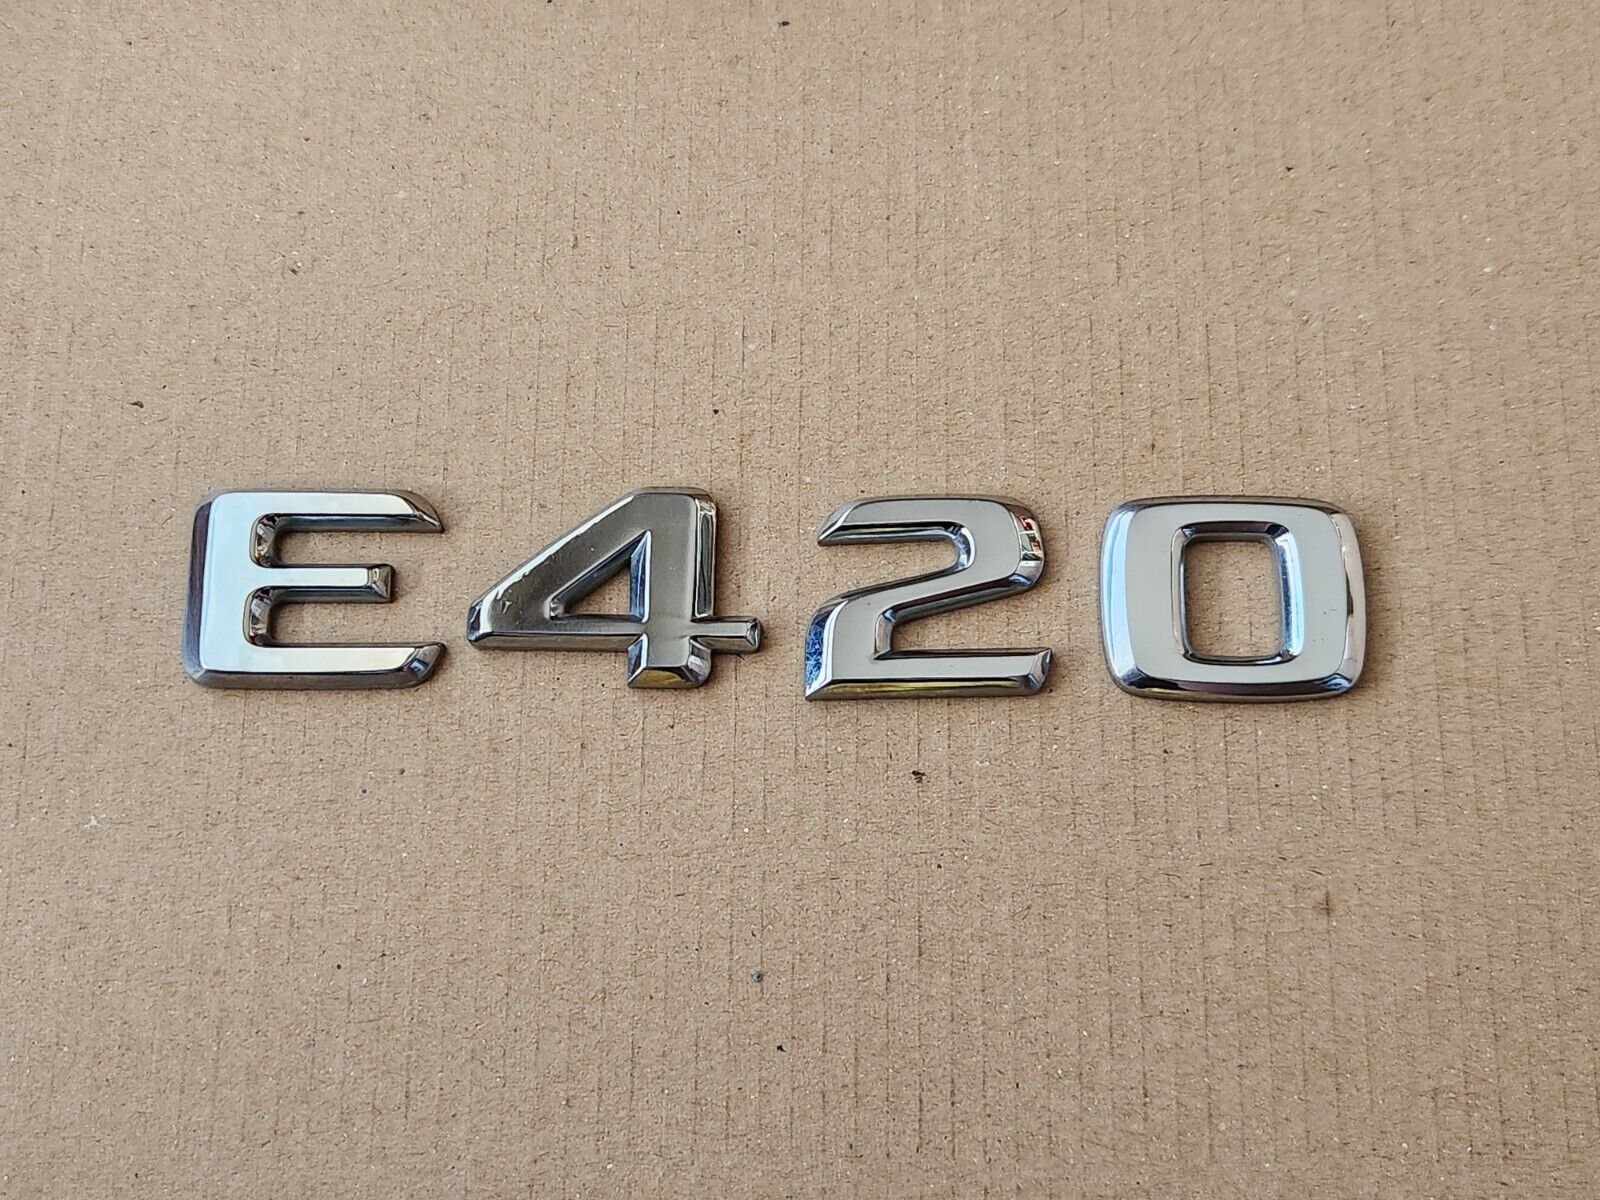 OEM Genuine Mercedes Benz W210 E420 Trunk Emblem Badge Logo Letters Chrome